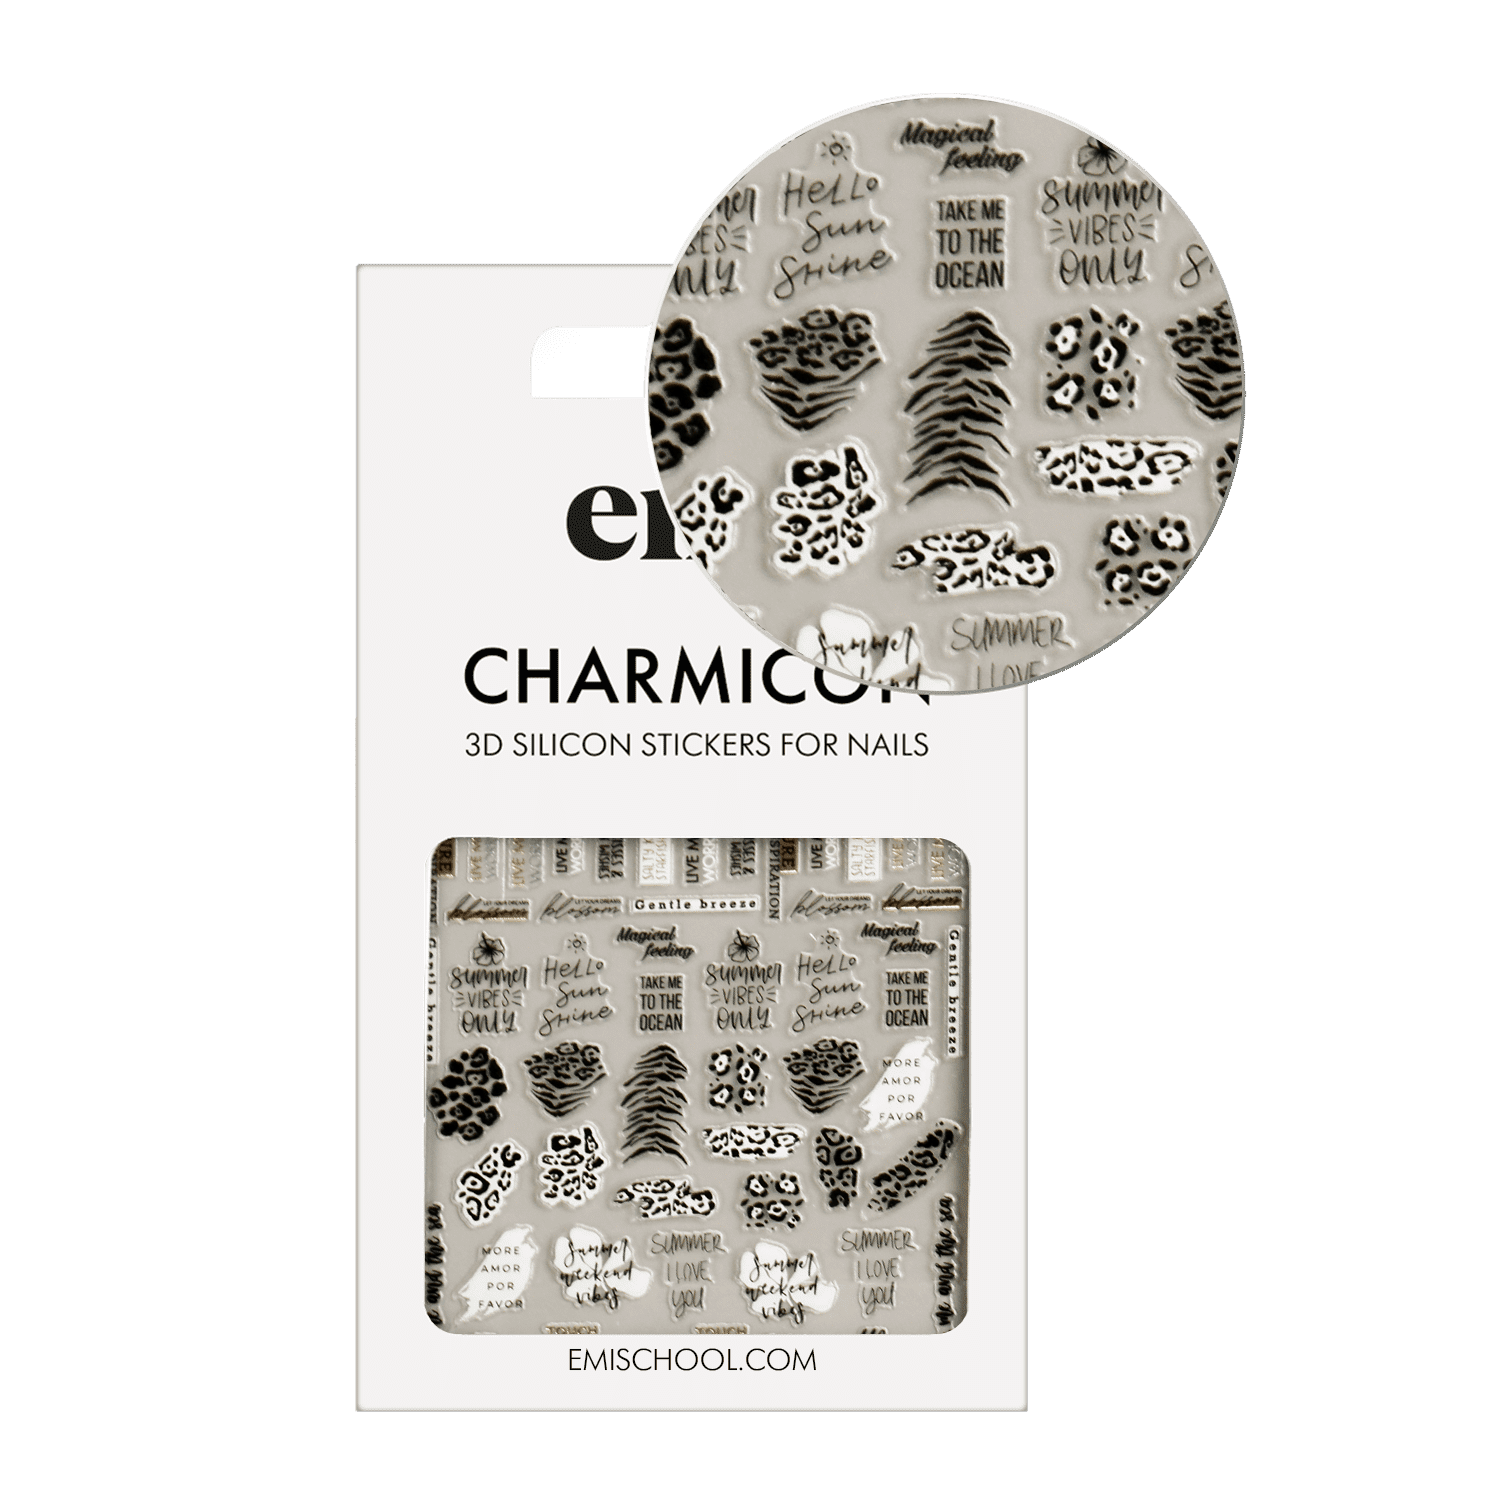 Charmicon 3D Silicone Stickers #252 Savanna